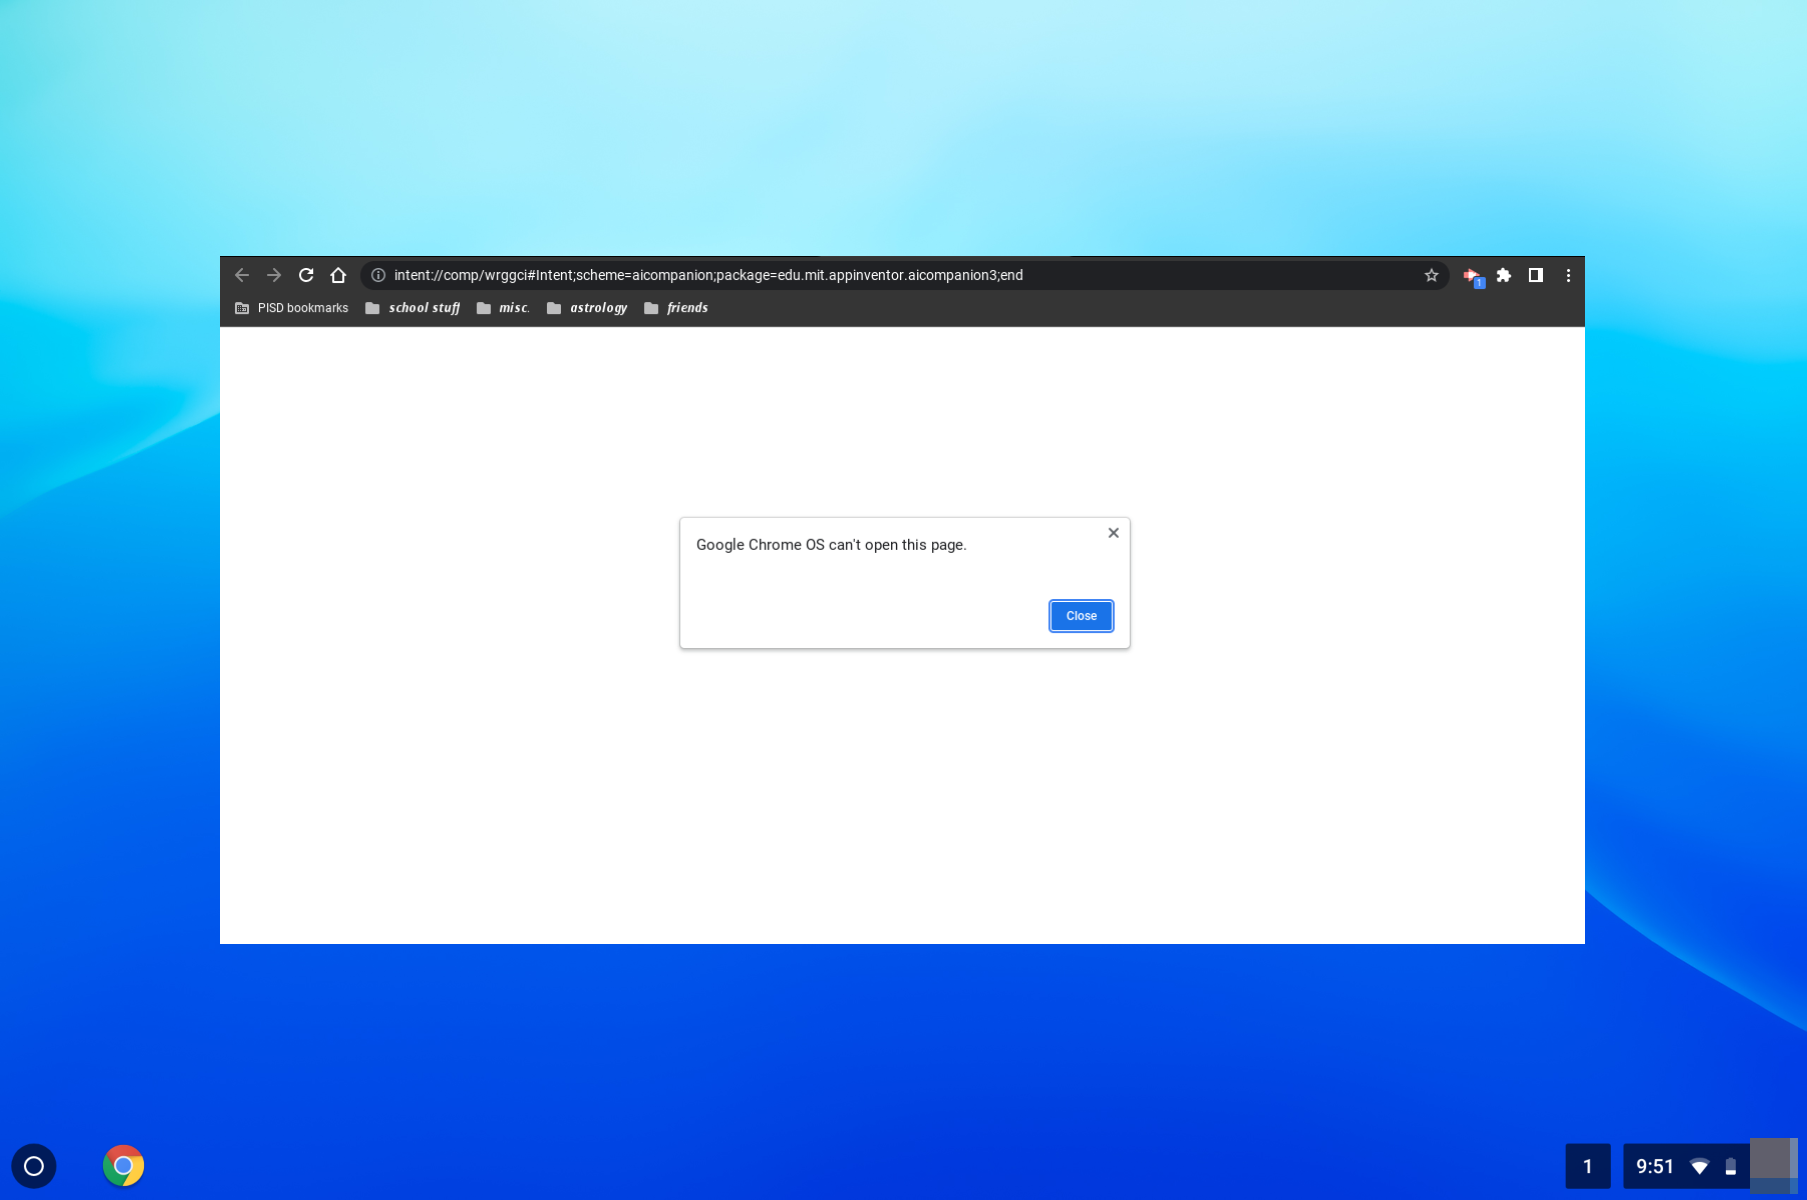 Google Chrome OS no puede abrir esta página: cómo solucionar este error